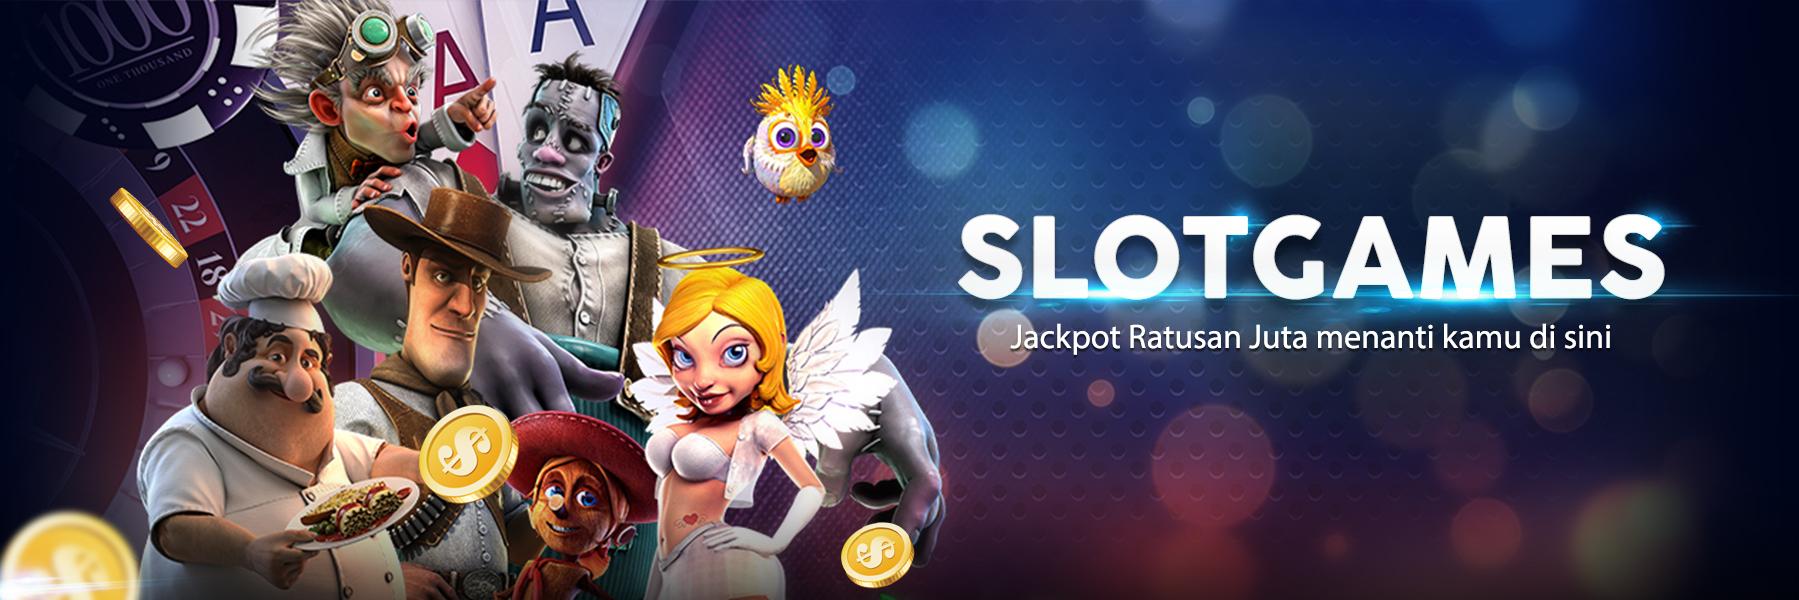 Judi Slot Online Resmi Playtech Deposit Termurah Rp 10RB